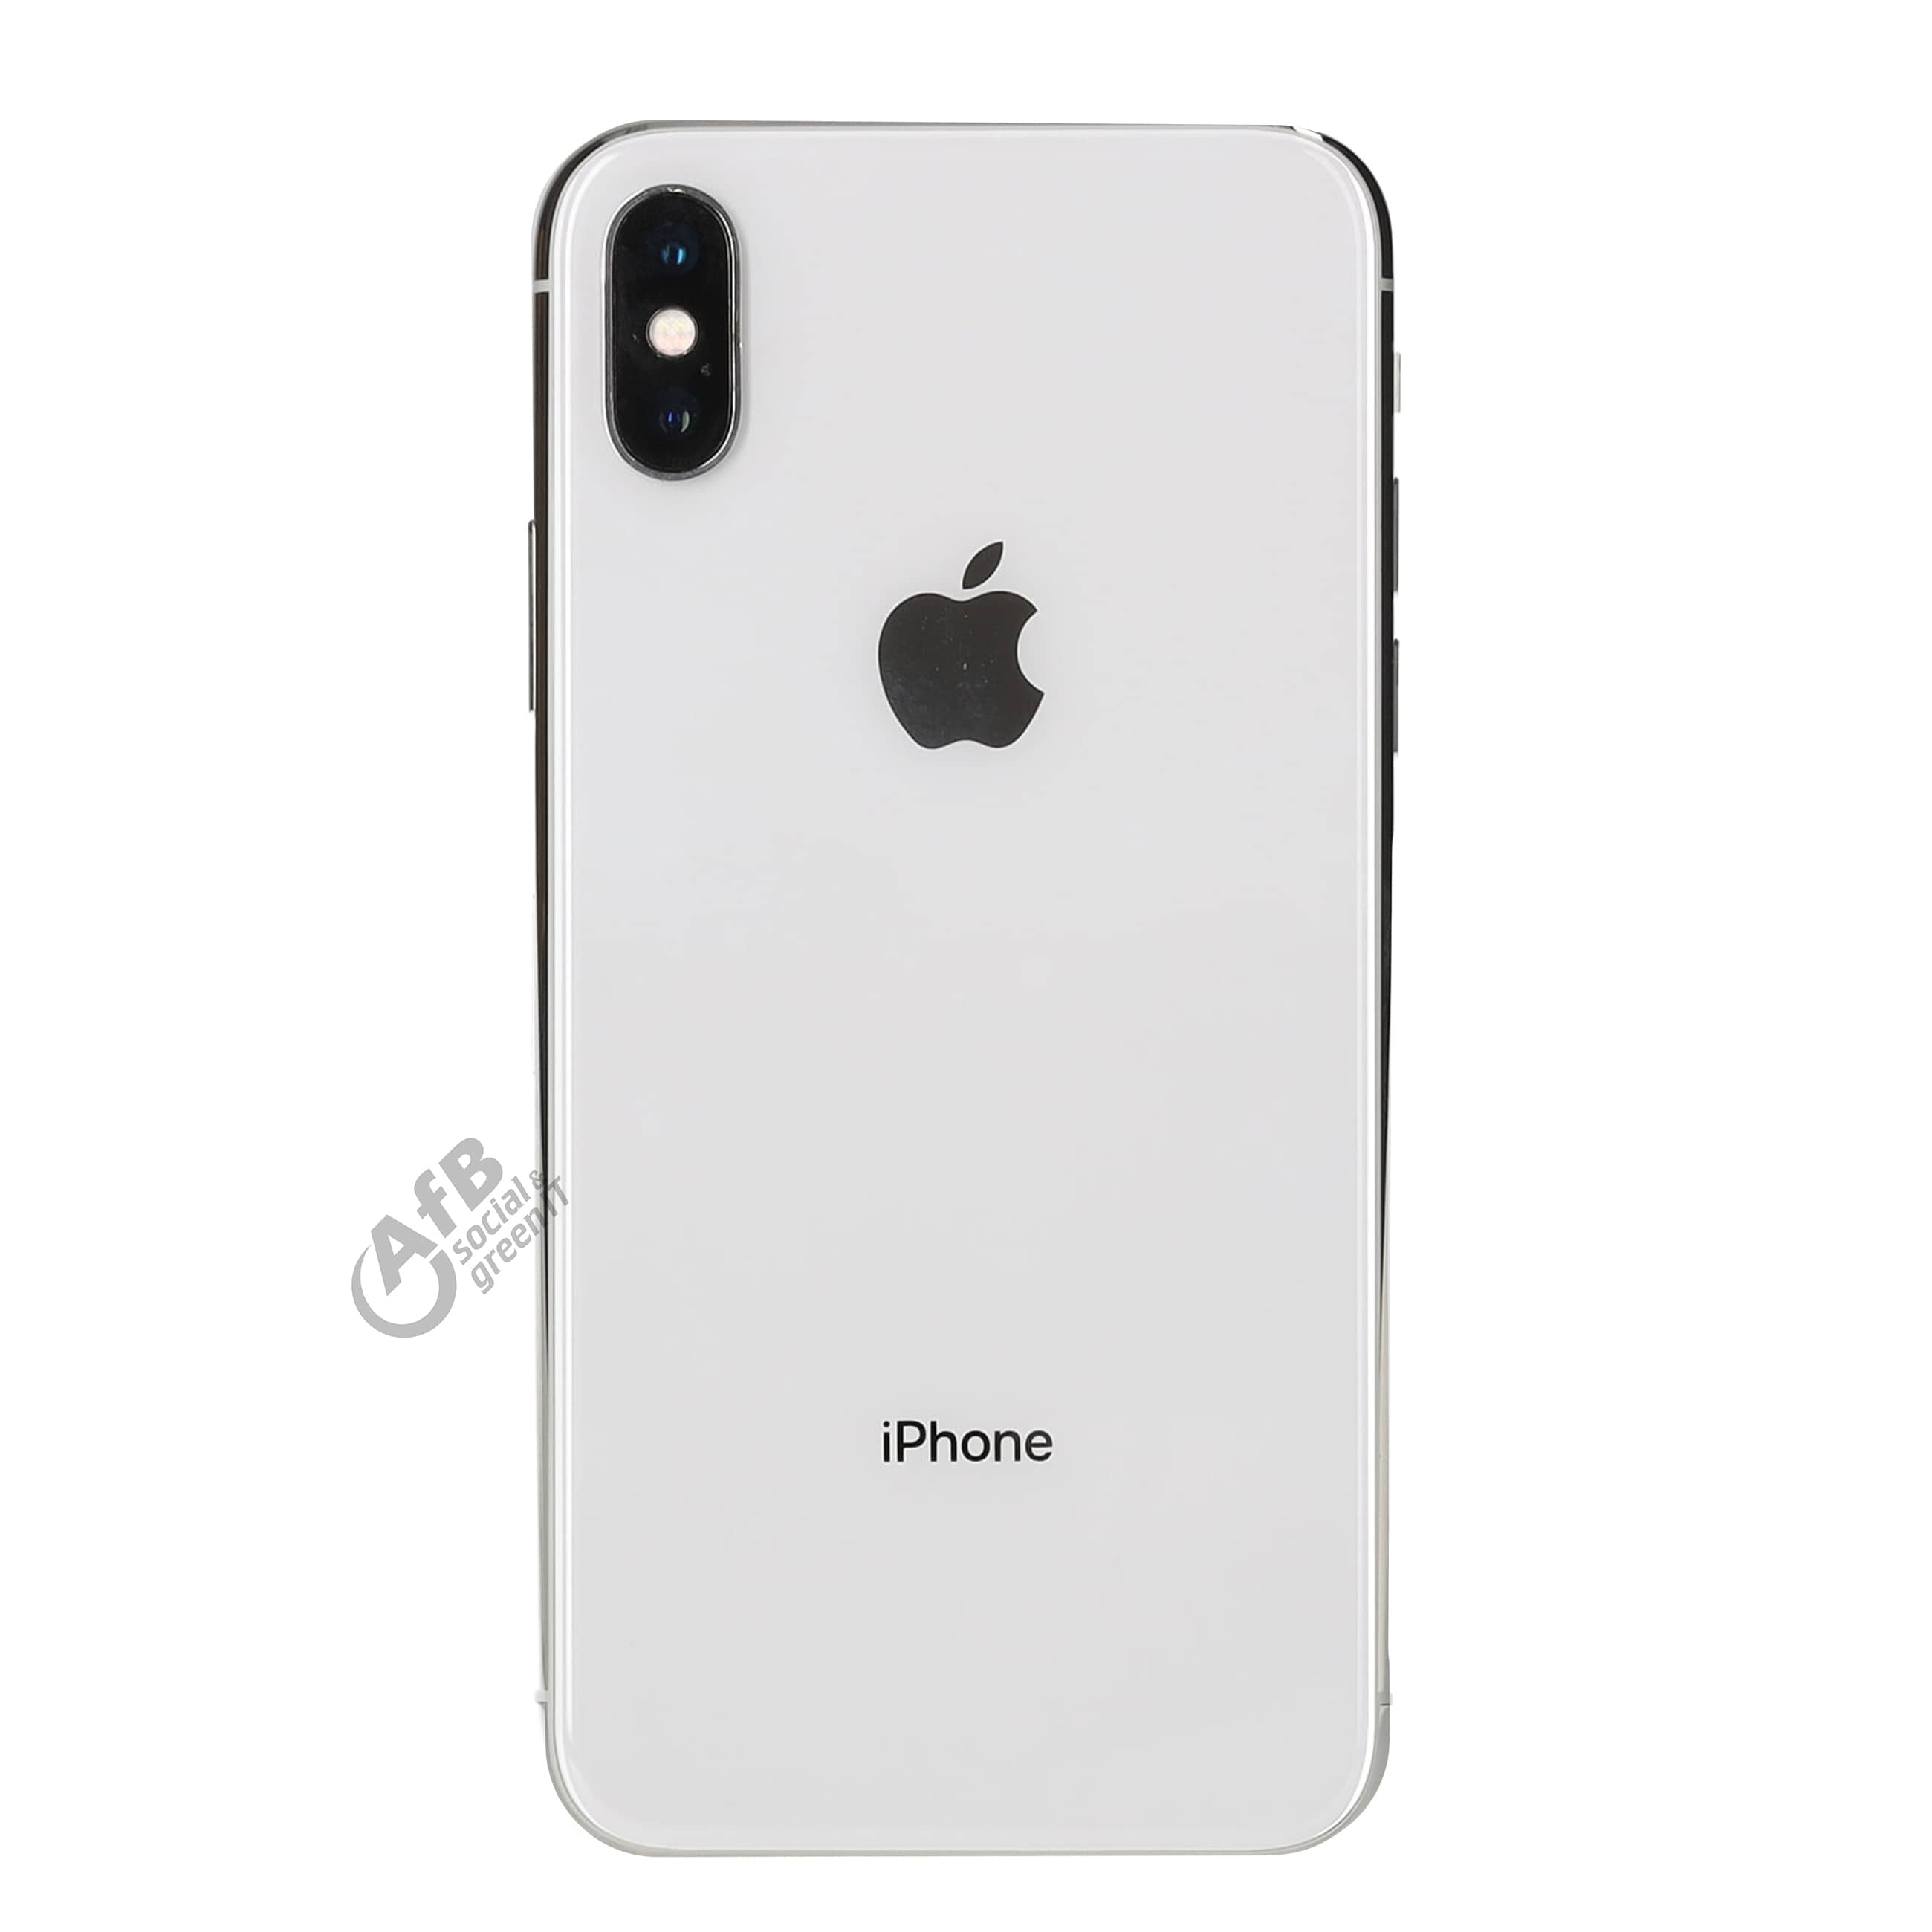 Apple iPhone X - 64 GB - Silver - Single-SIM